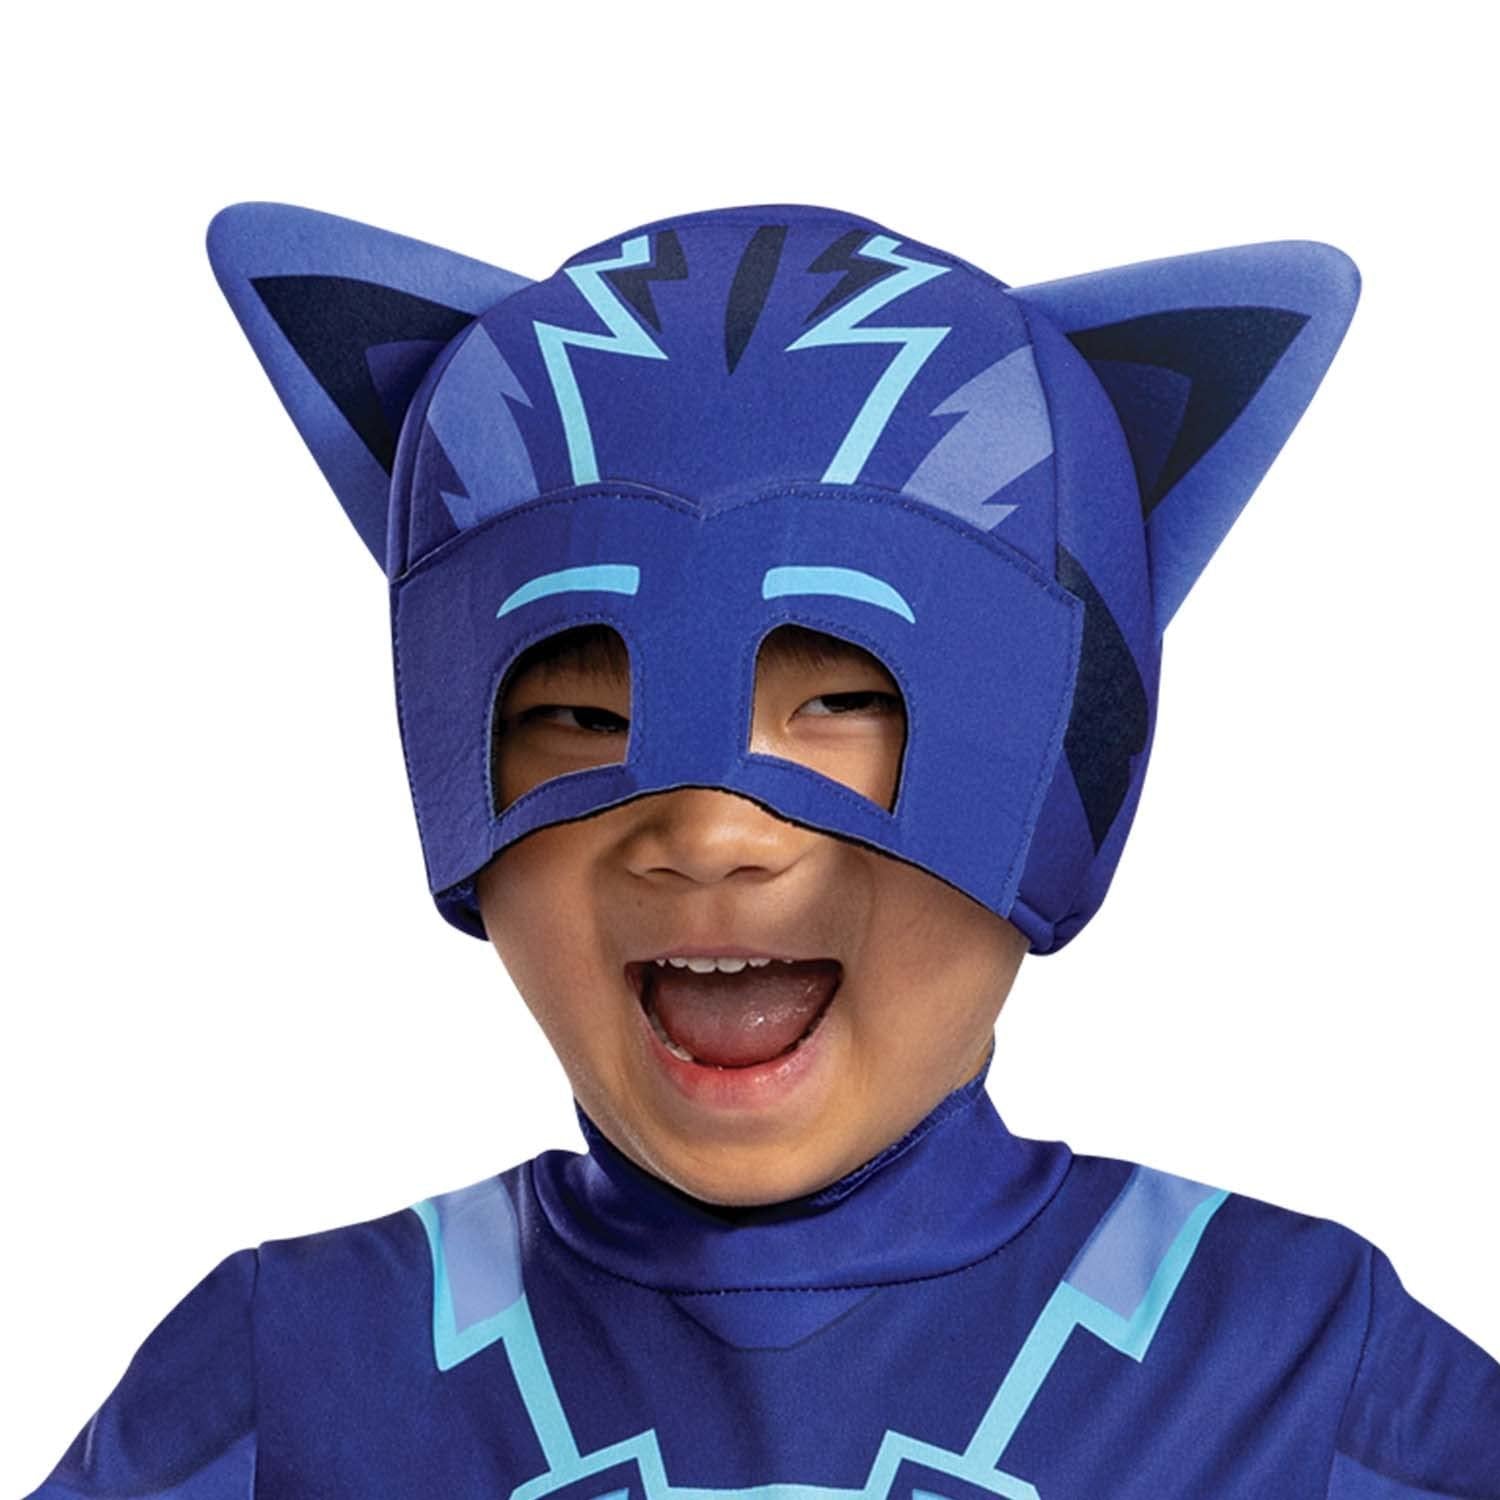 Disguise Catboy Costume for Kids, Official PJ Masks Megasuit Costume Jumpsuit and Mask, Toddler Size Large (4-6)